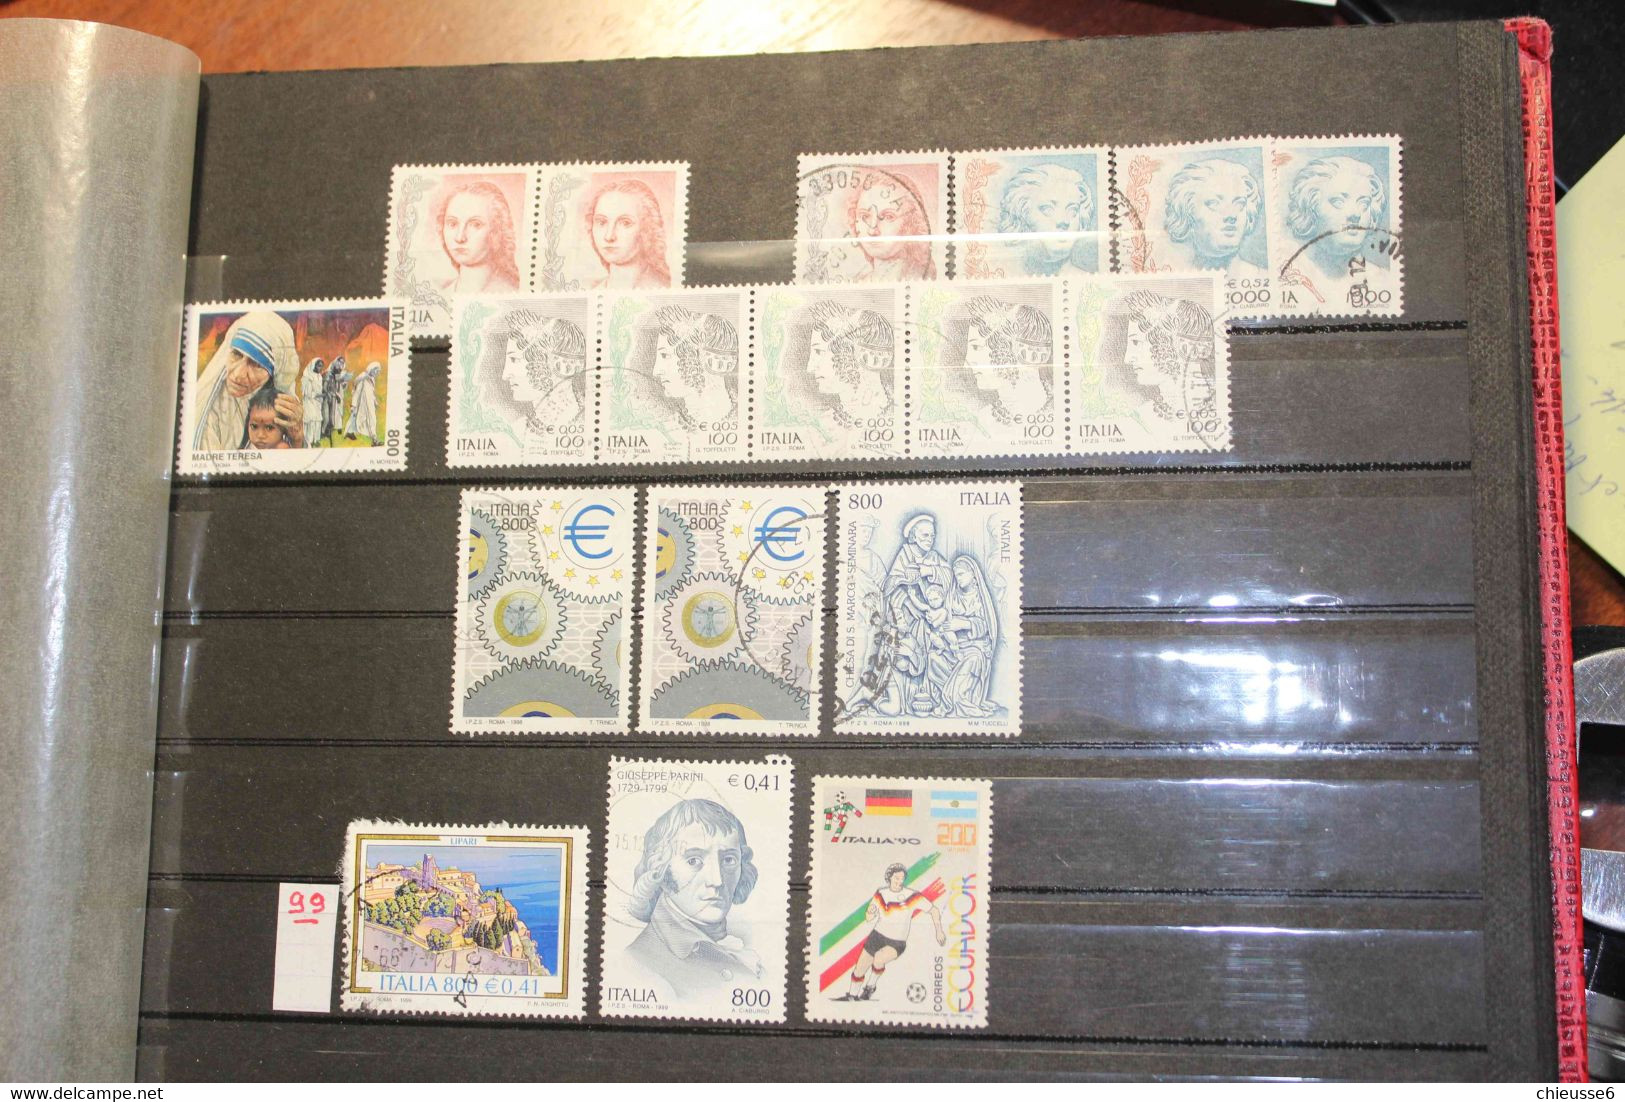 Italie - Collection + 600 timbres oblitérés environ